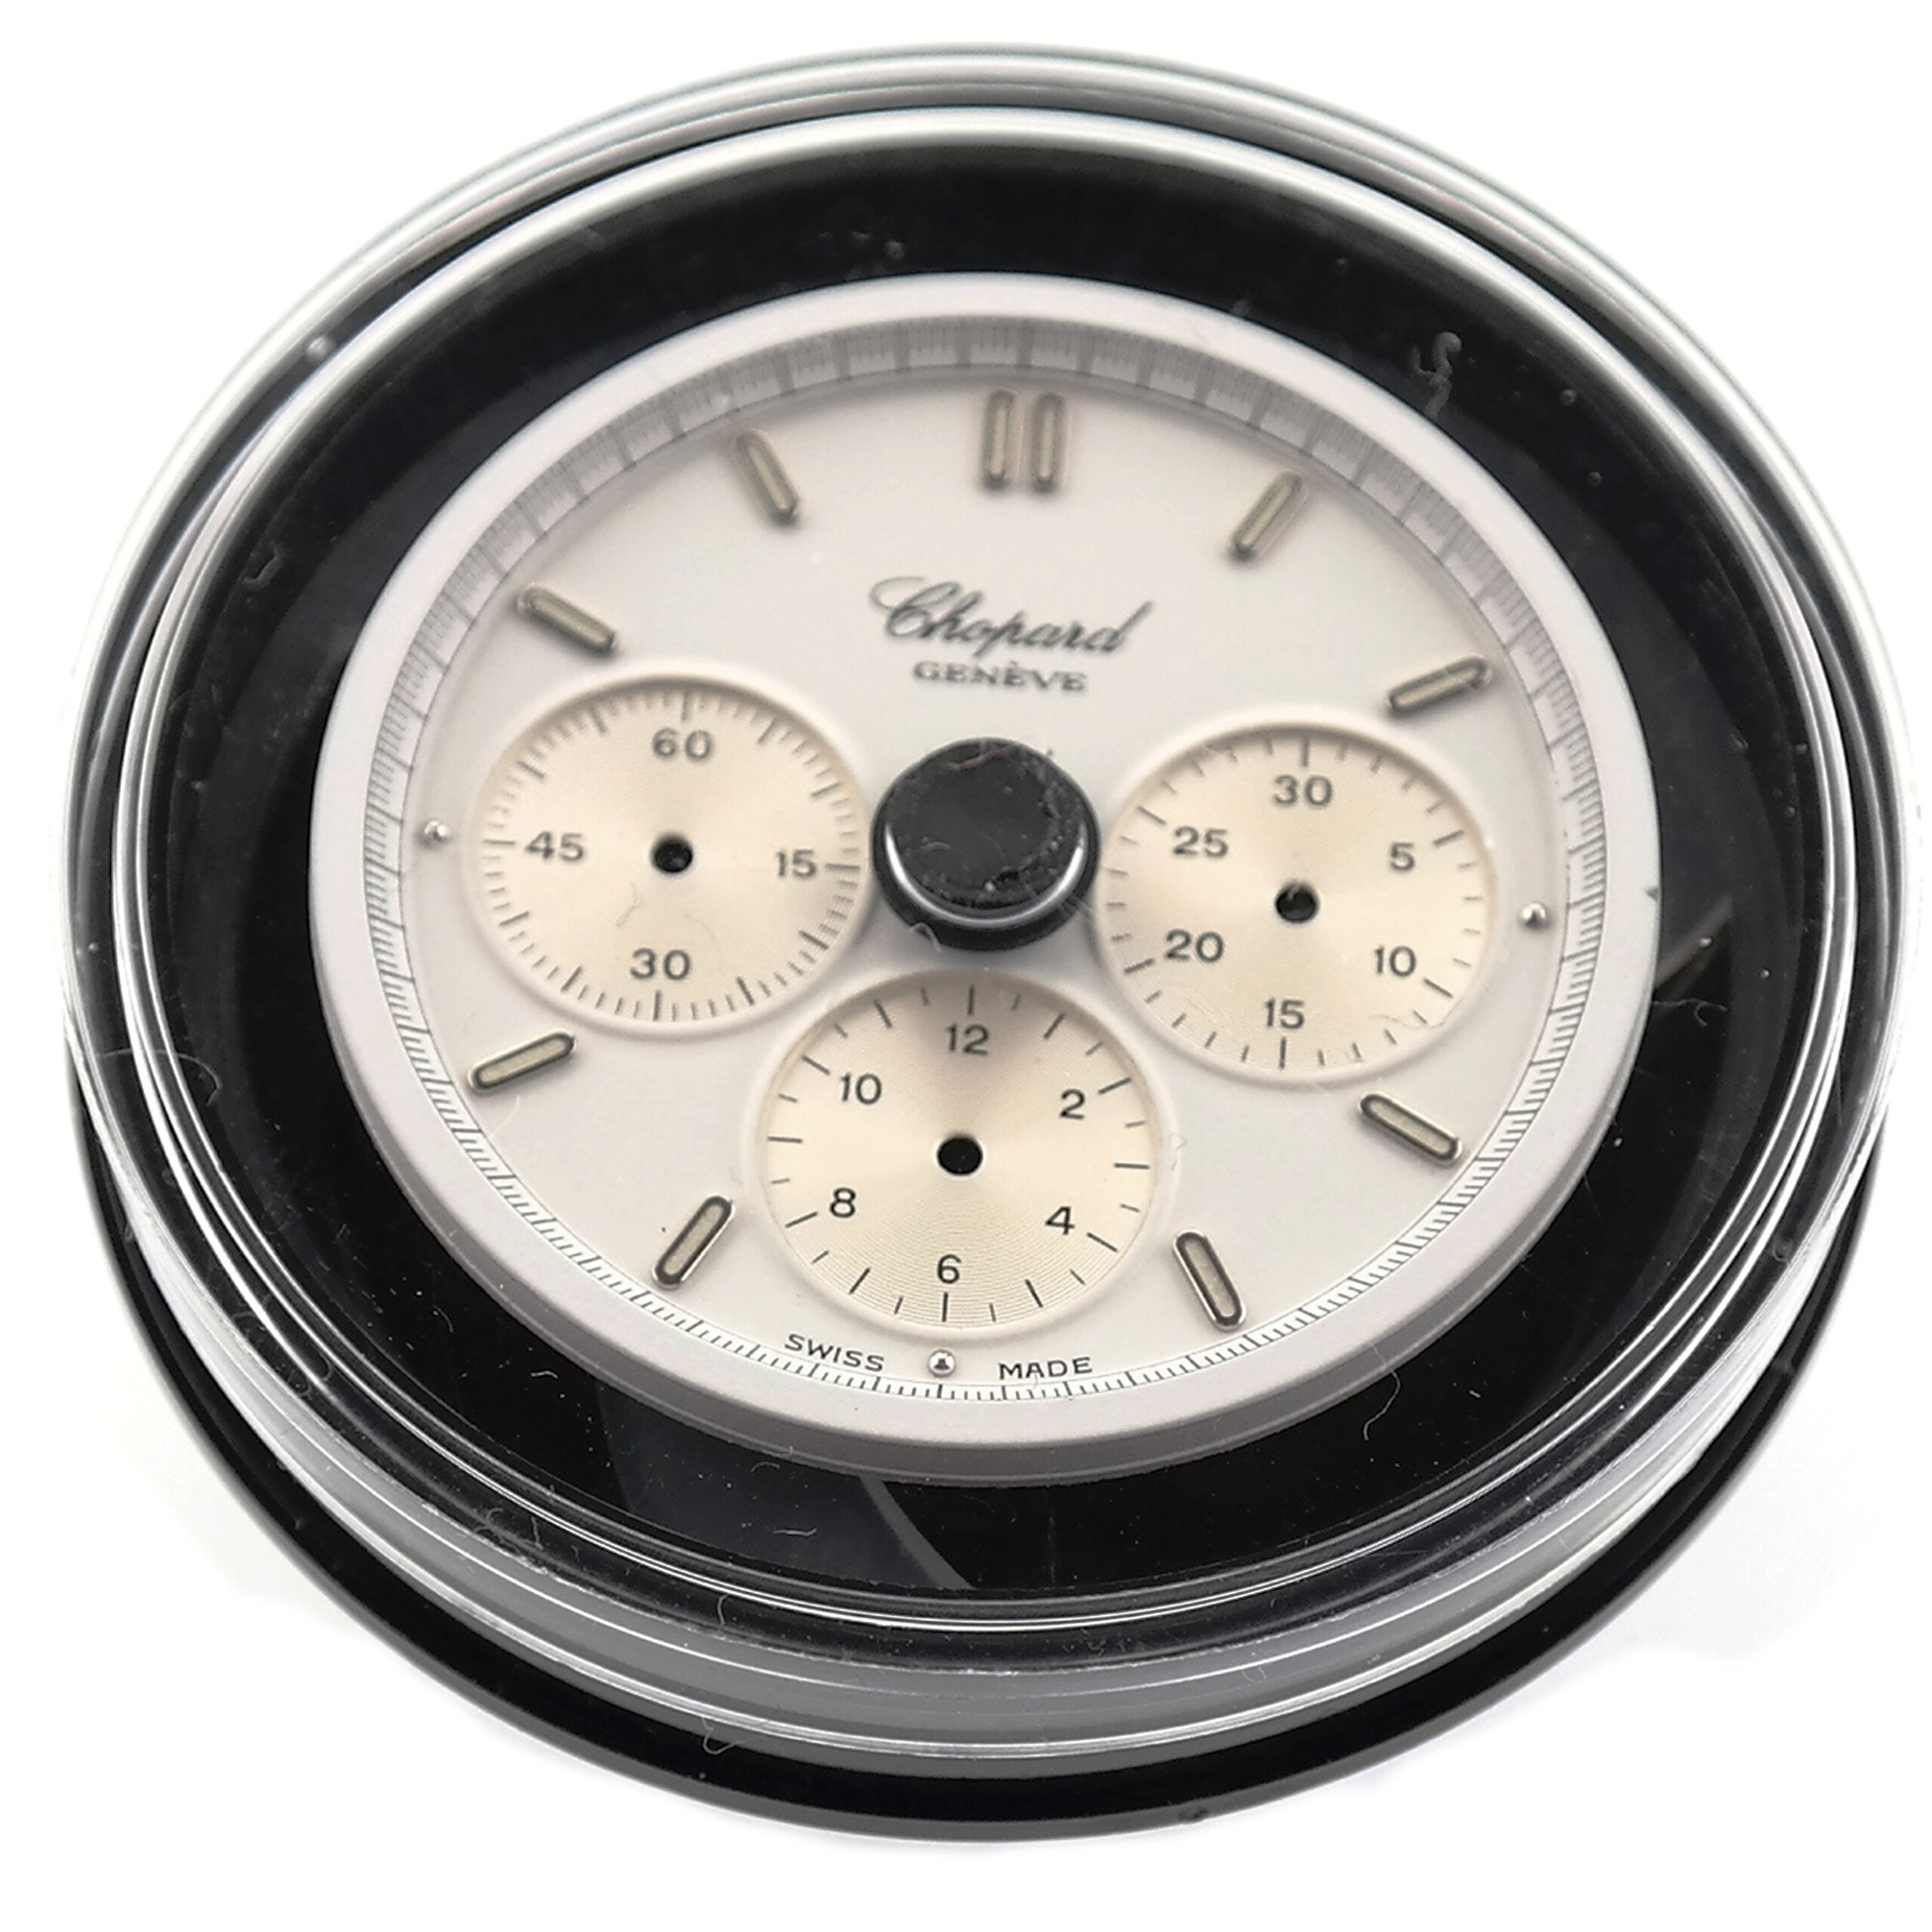 CHOPARD - Mille Miglia 1990s - Ref. 8179 -  Watch Dial